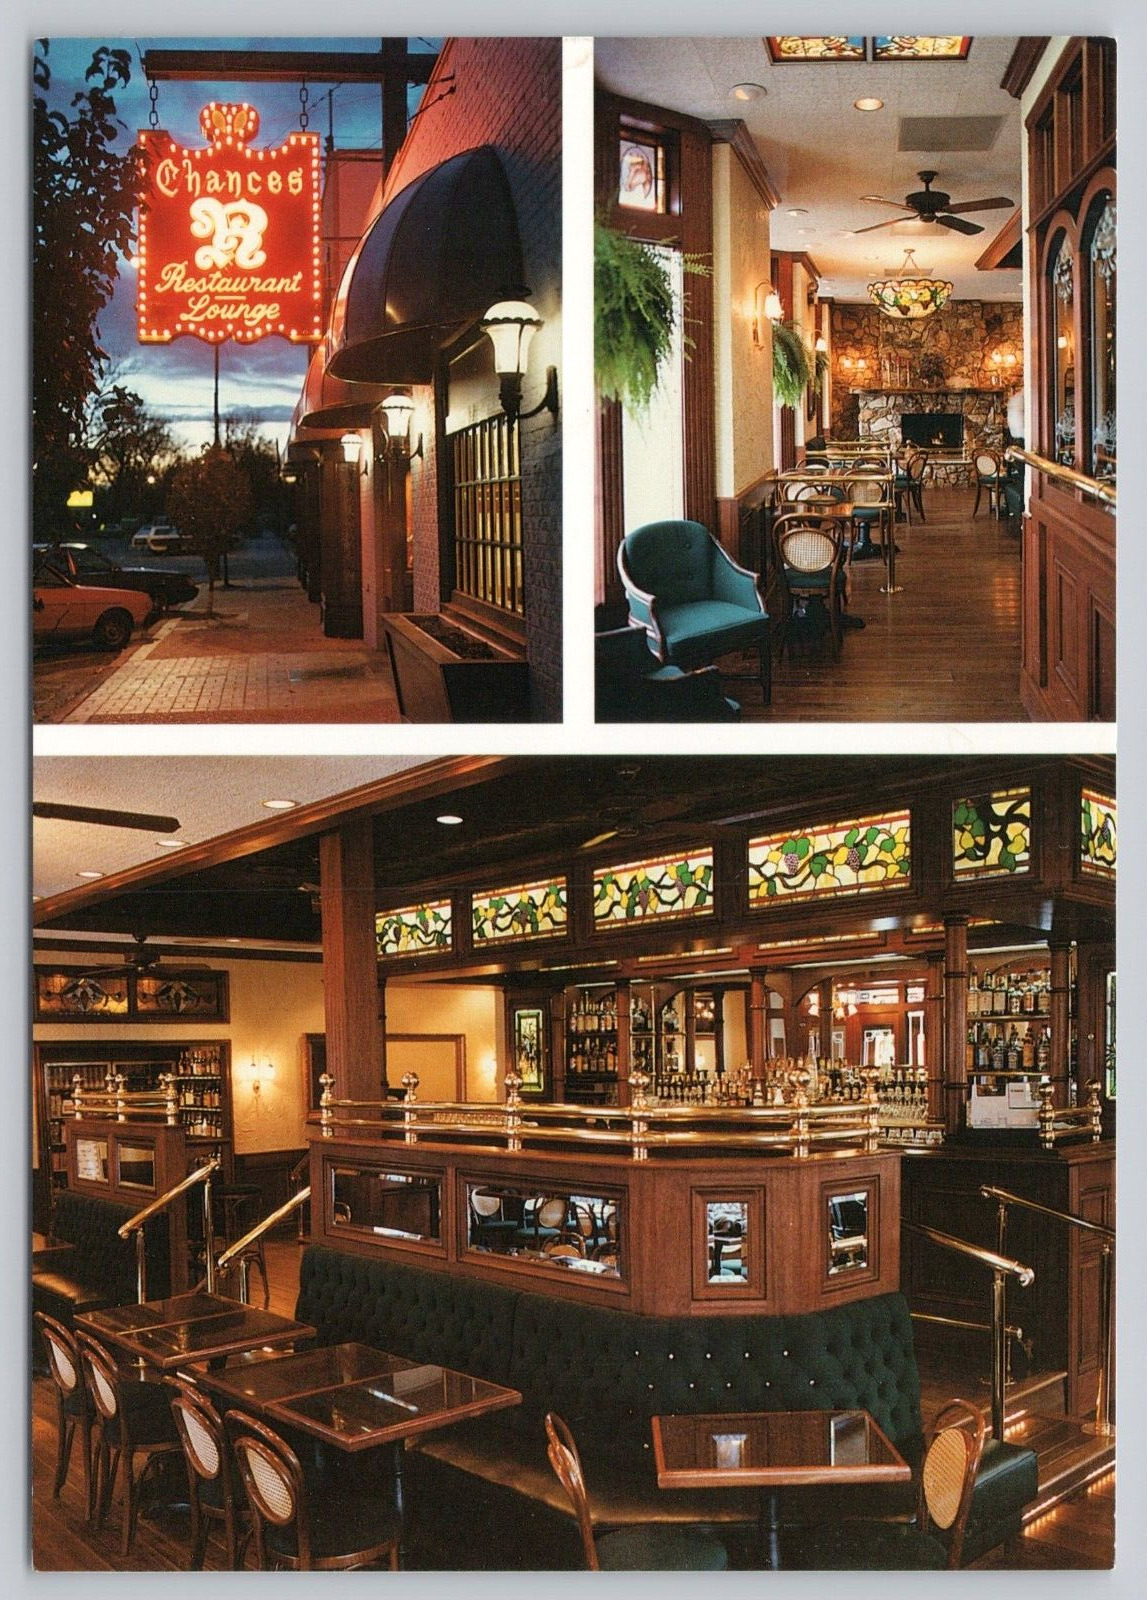 Chances R Resutaurant & Hob Nob Lounge, York NE Nebraska Continental Postcard